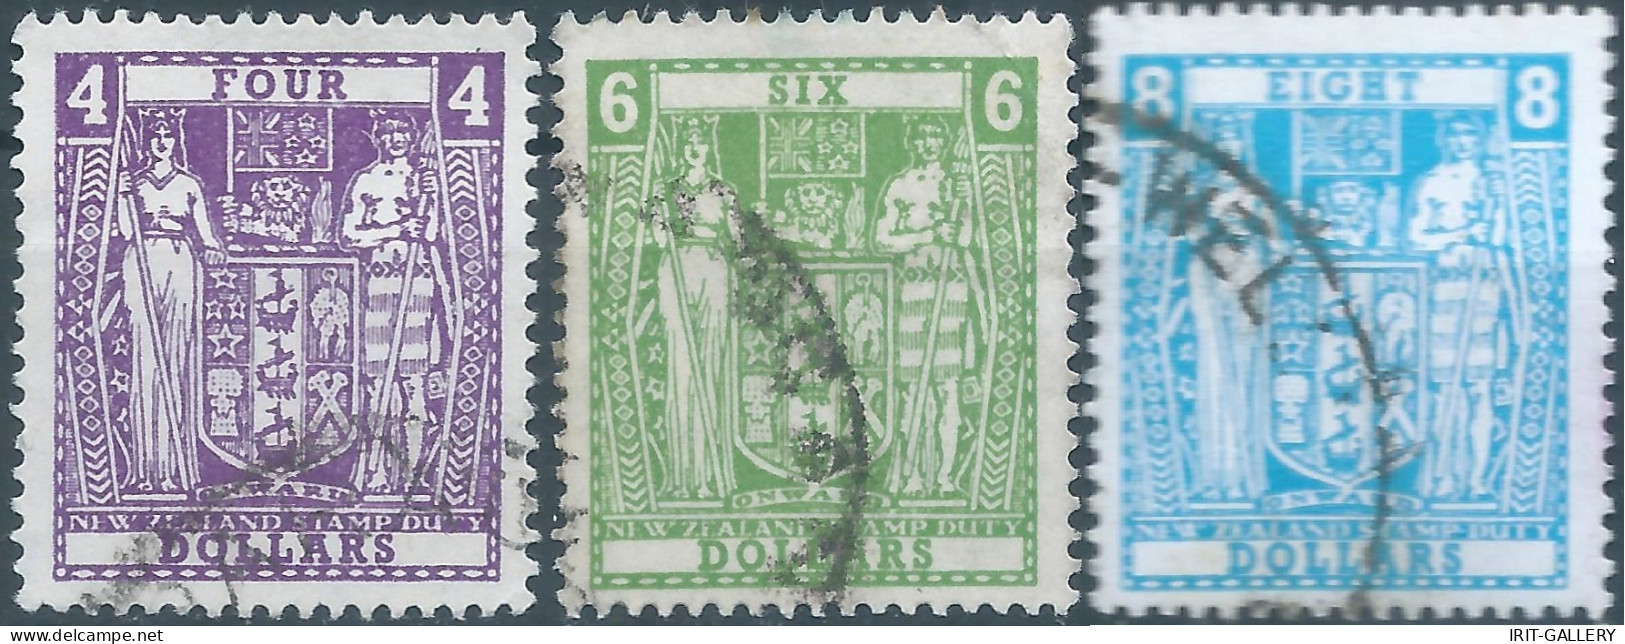 Nuova Zelanda,Nouvelle-Zélande- NEW ZELAND 1967 REVENUE STAMP DUTY-Tax Fiscal,4 - 6 - 8 Dollars,Obliterated - Postal Fiscal Stamps